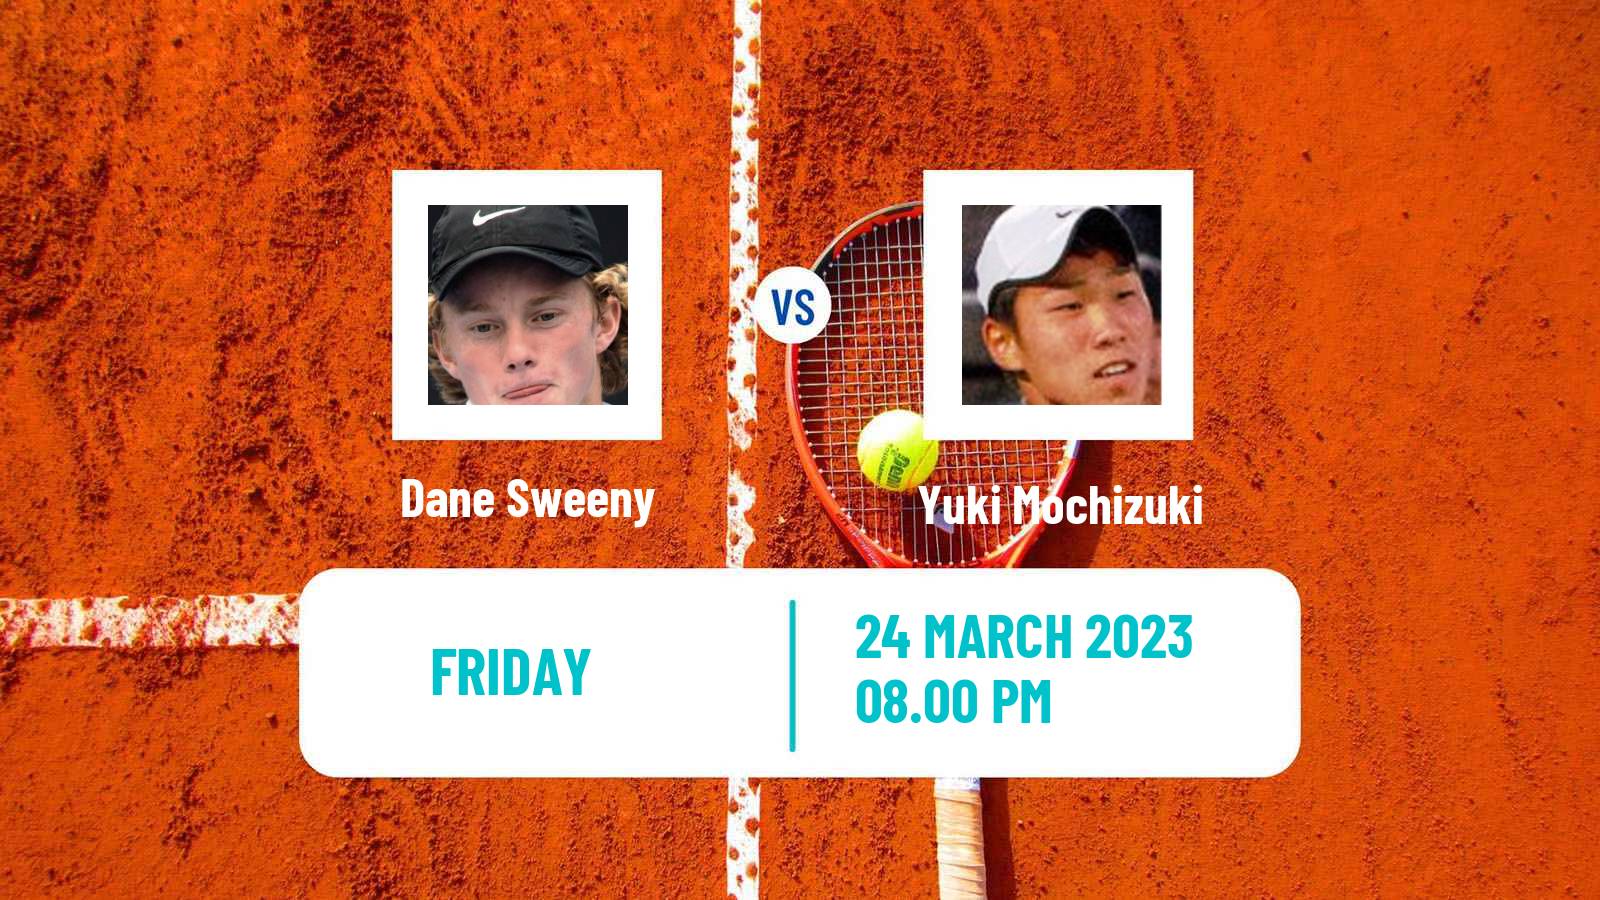 Tennis ITF Tournaments Dane Sweeny - Yuki Mochizuki